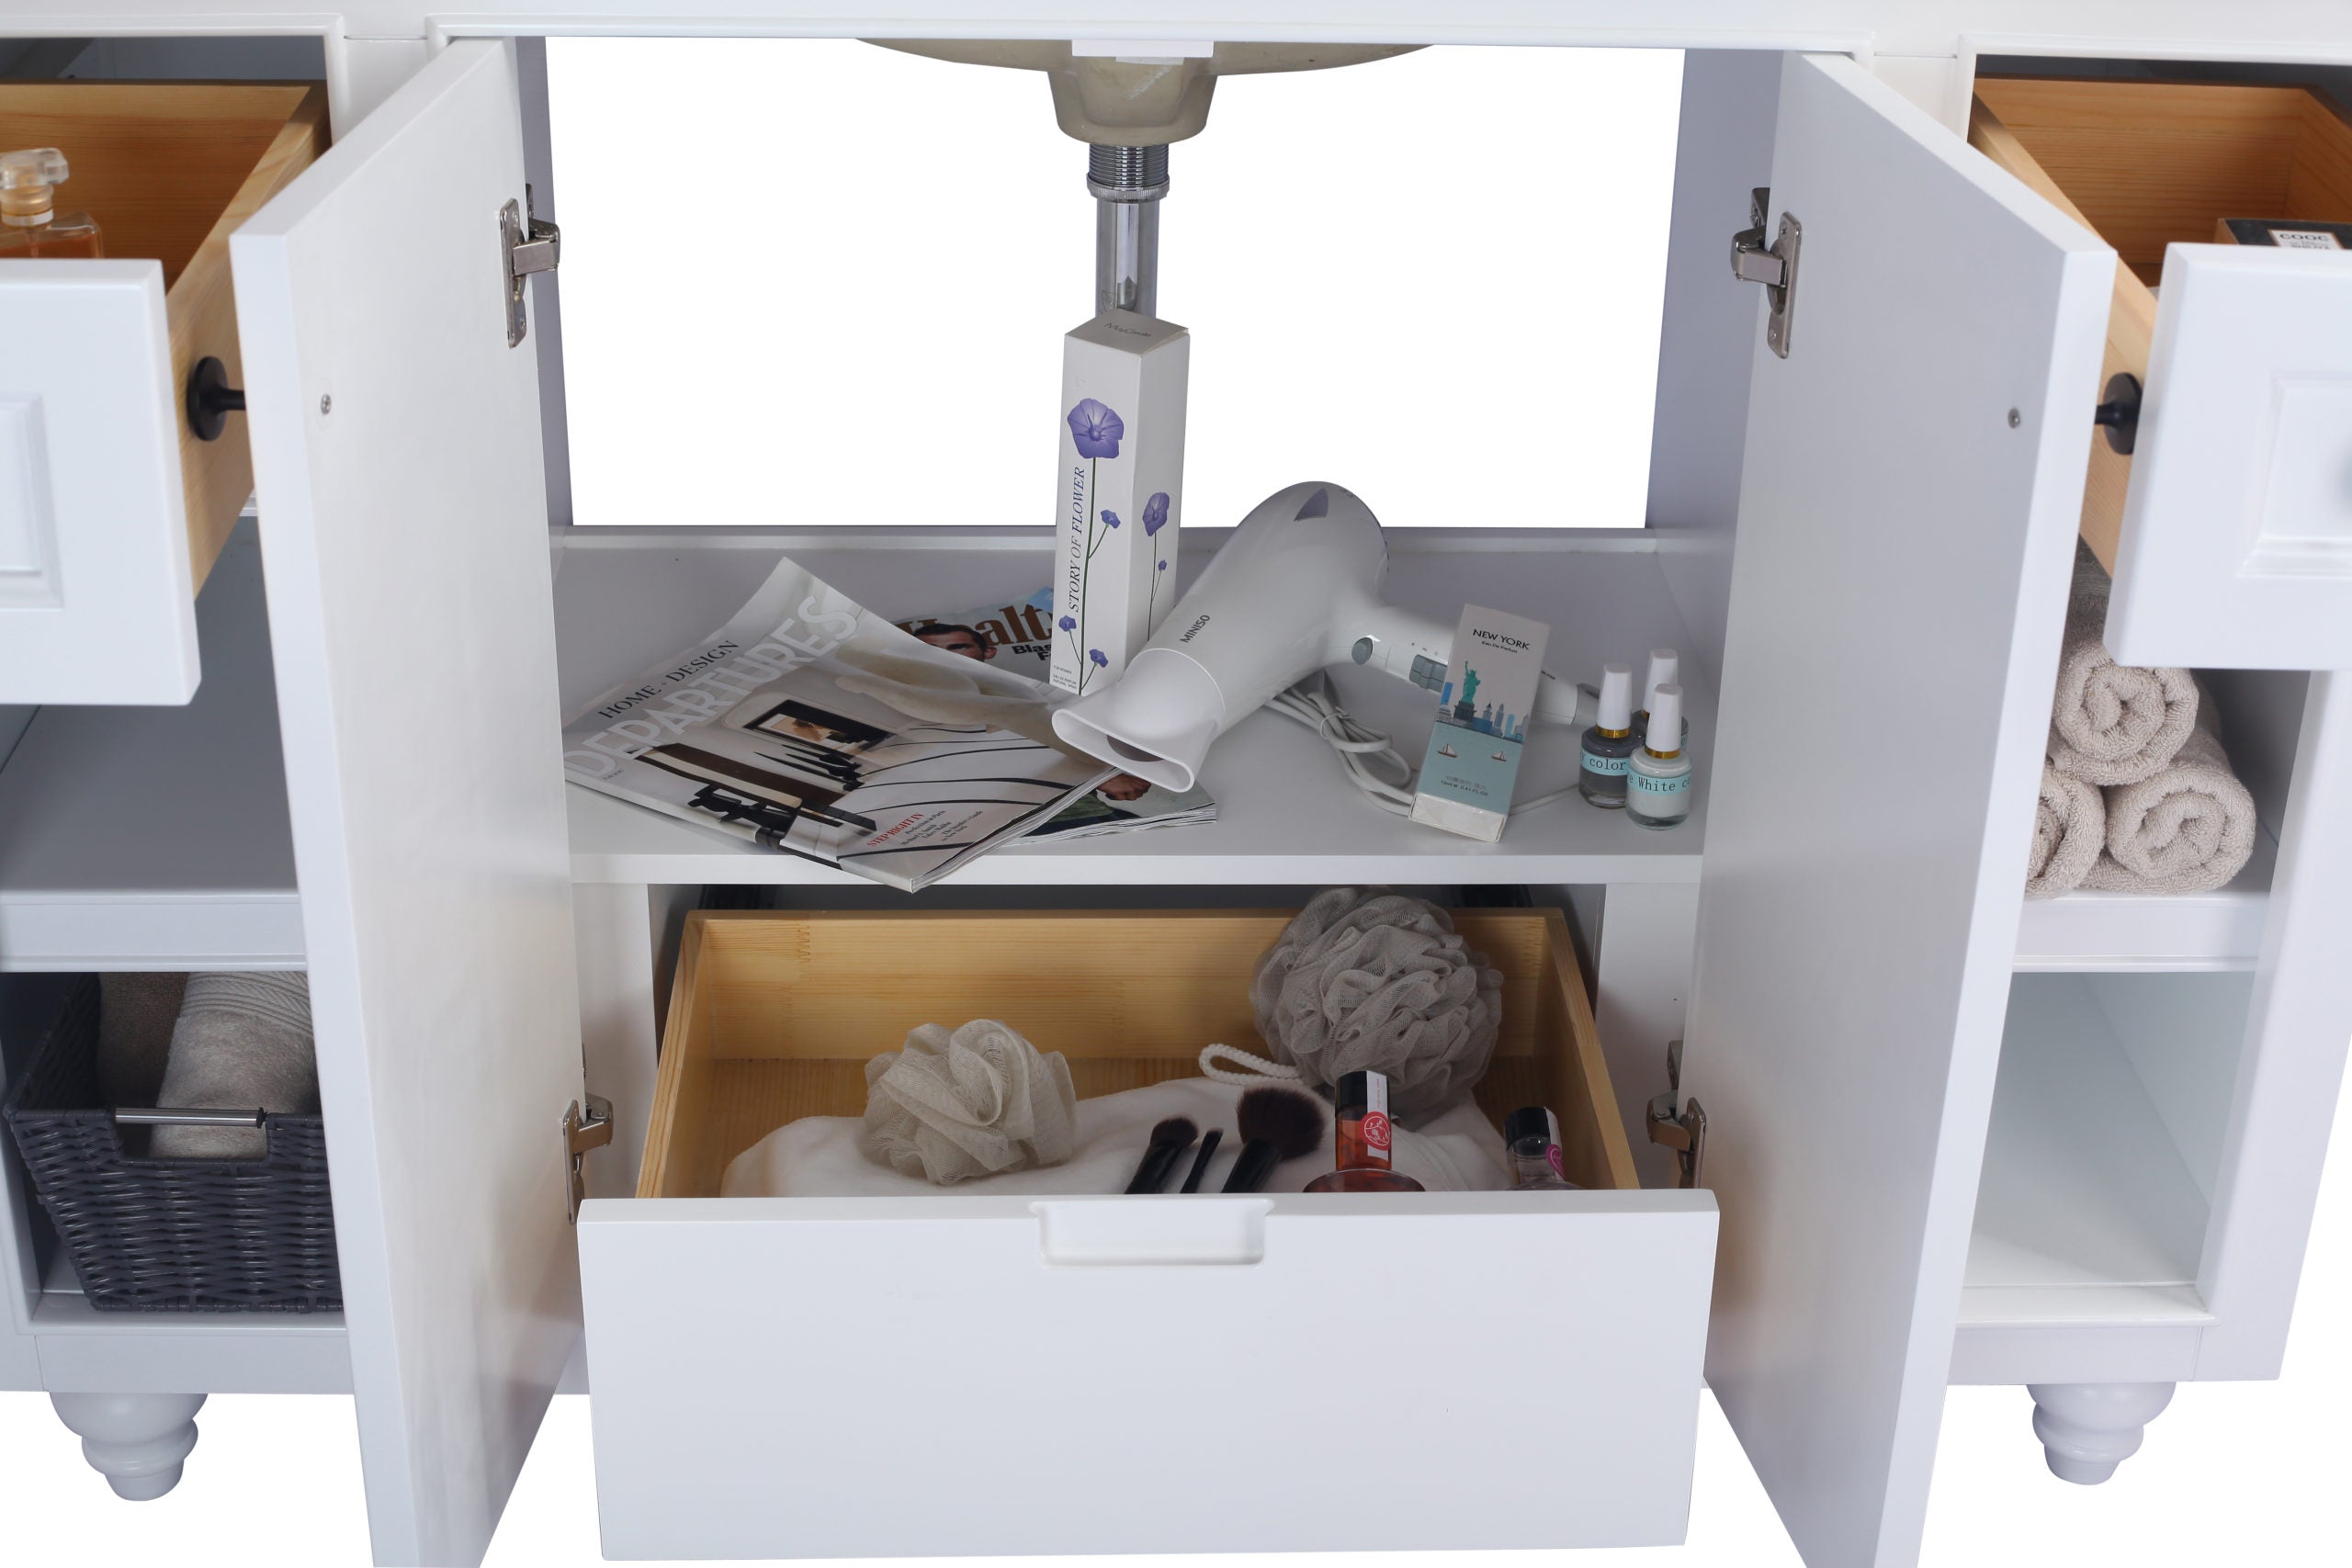 Laviva Odyssey 48" Maple Gray Bathroom Vanity Cabinet | 313613-48